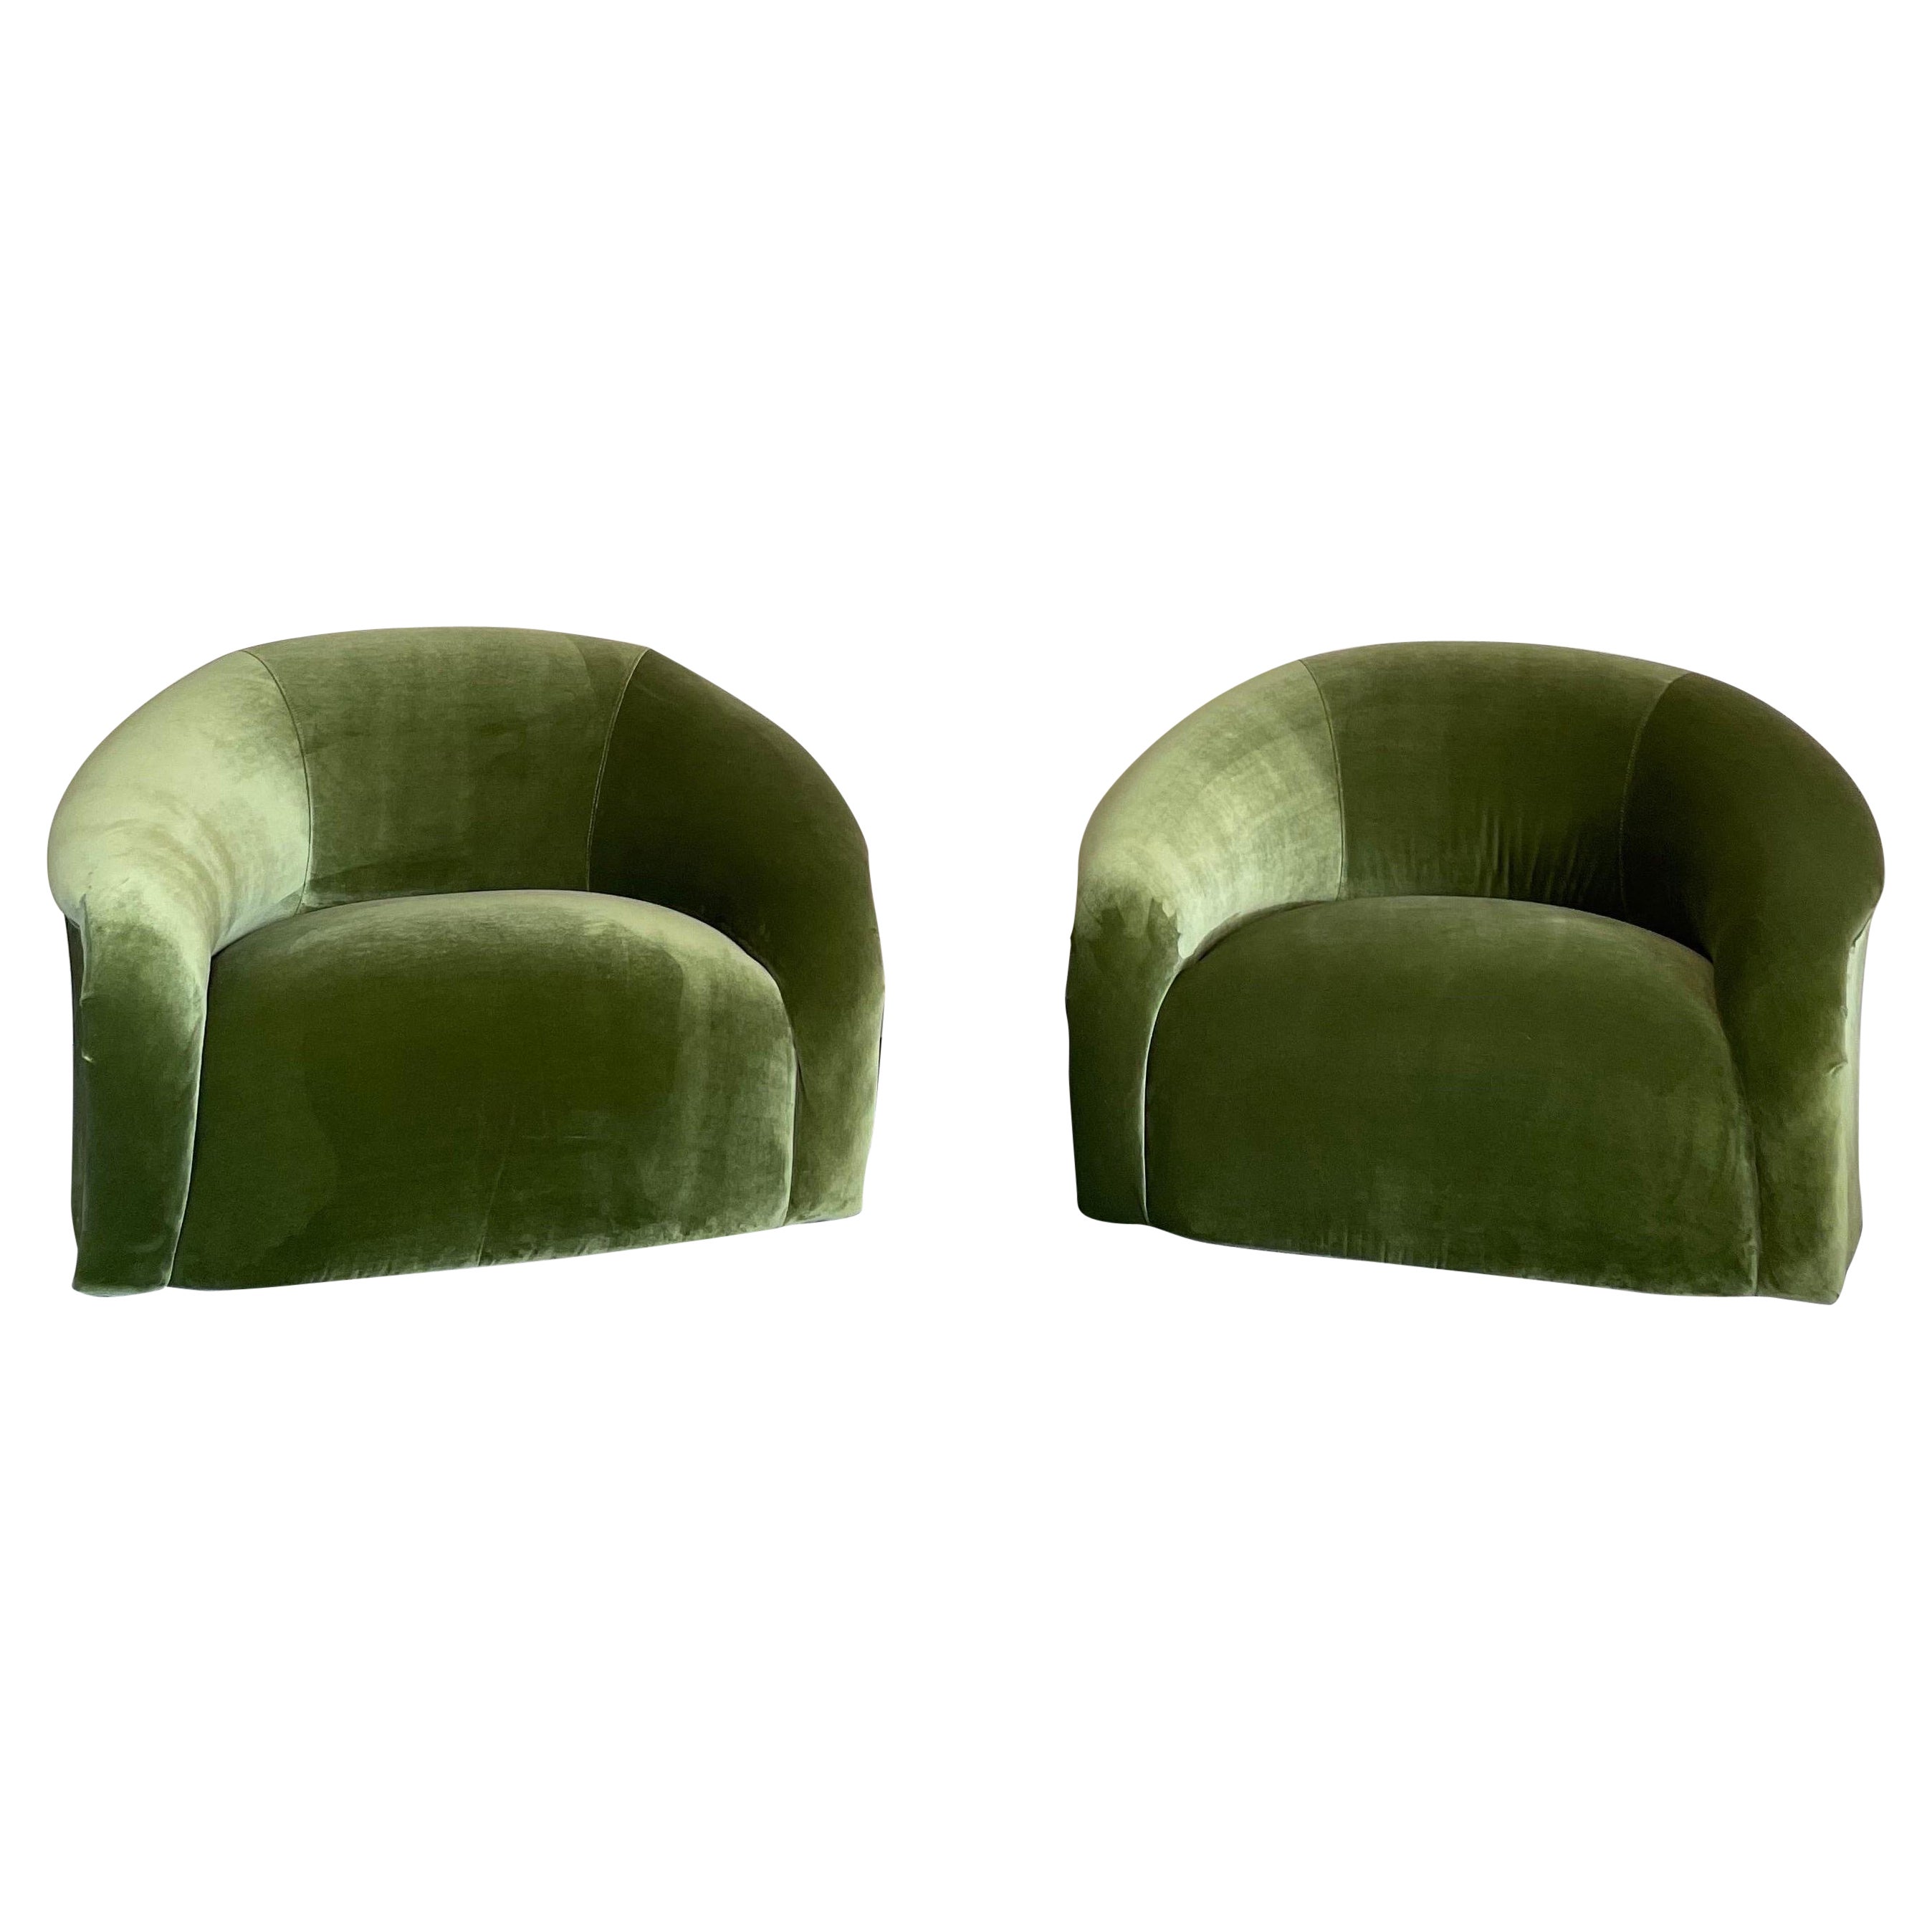 Sally Sirkin Lewis Chairs